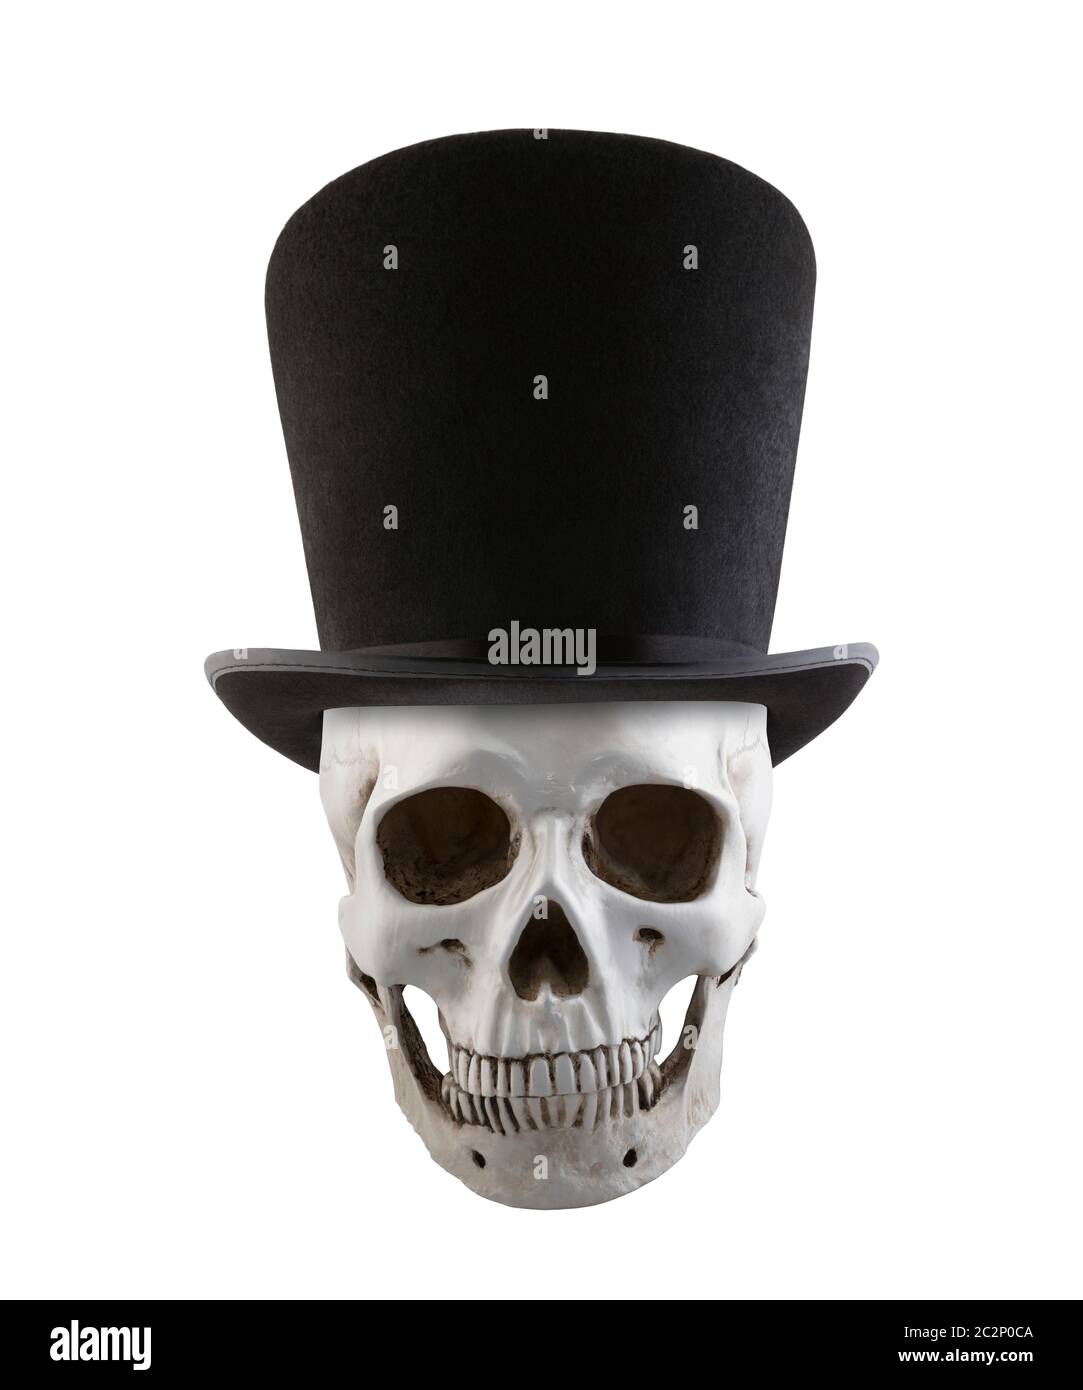 Cranio umano con extra neri alti vintage top hat isolati su sfondo bianco Foto Stock